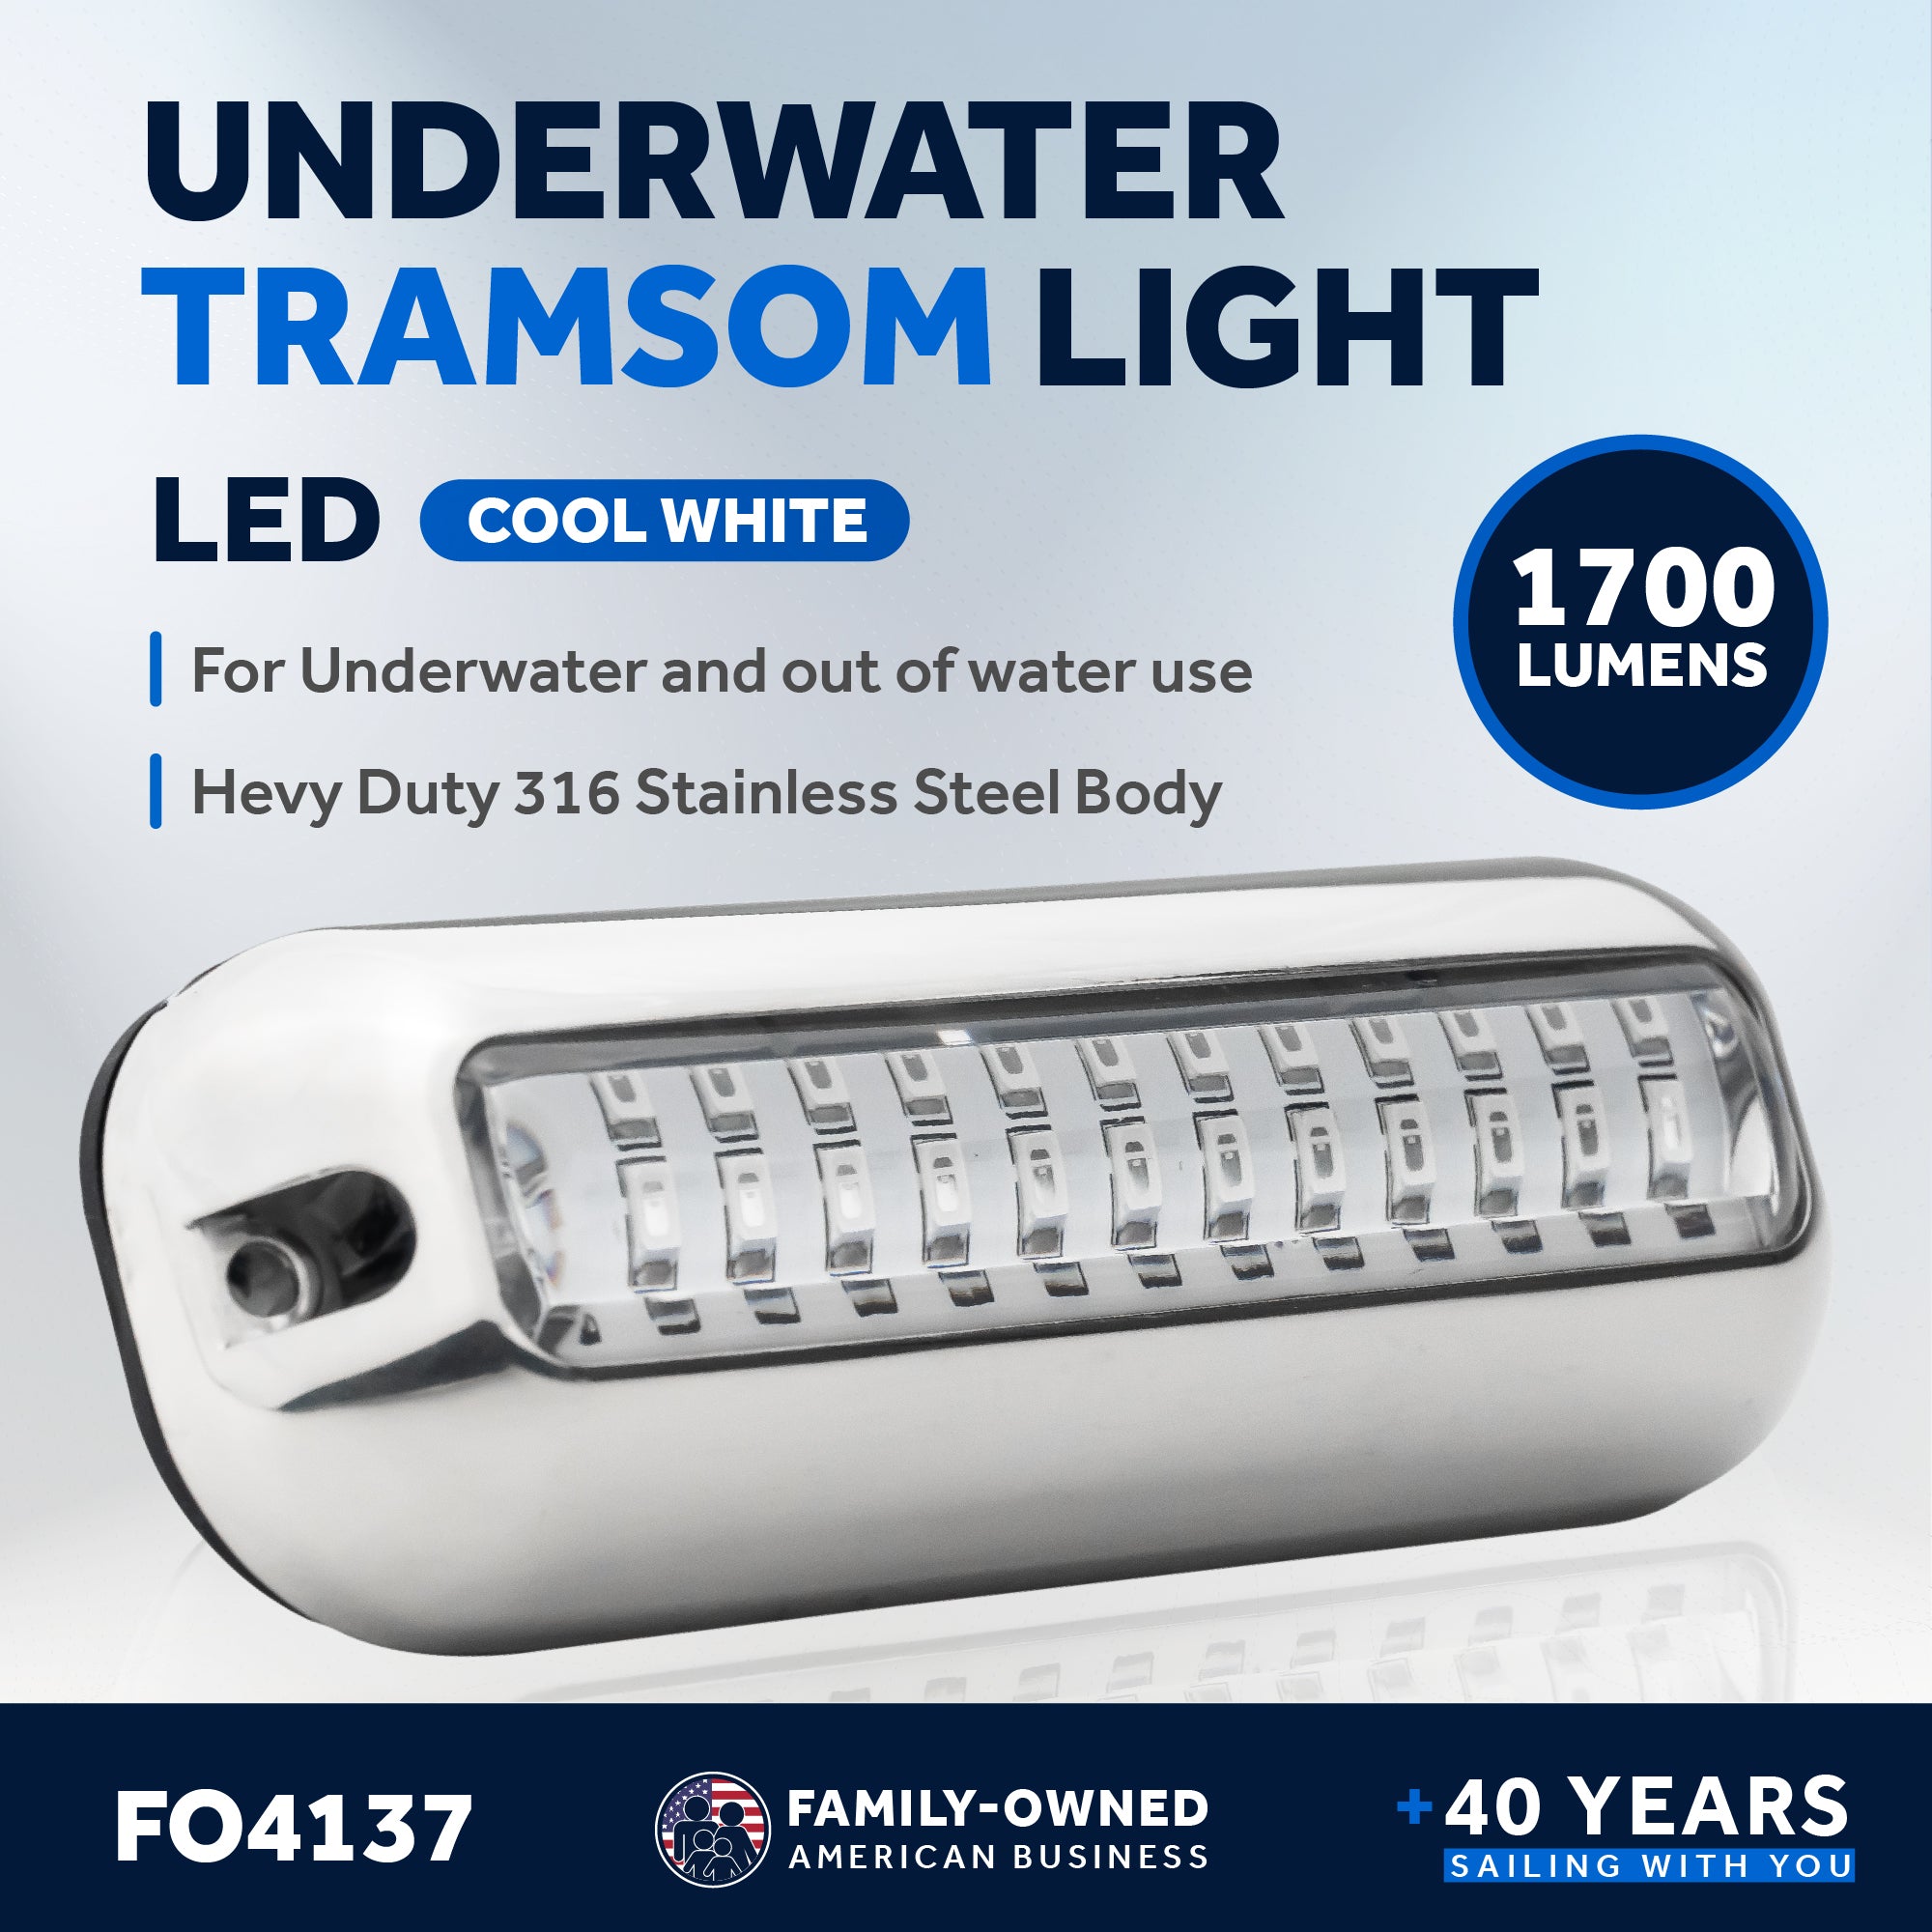 Underwater Transom Light, Stainless Steel, Cool White LED - FO4137